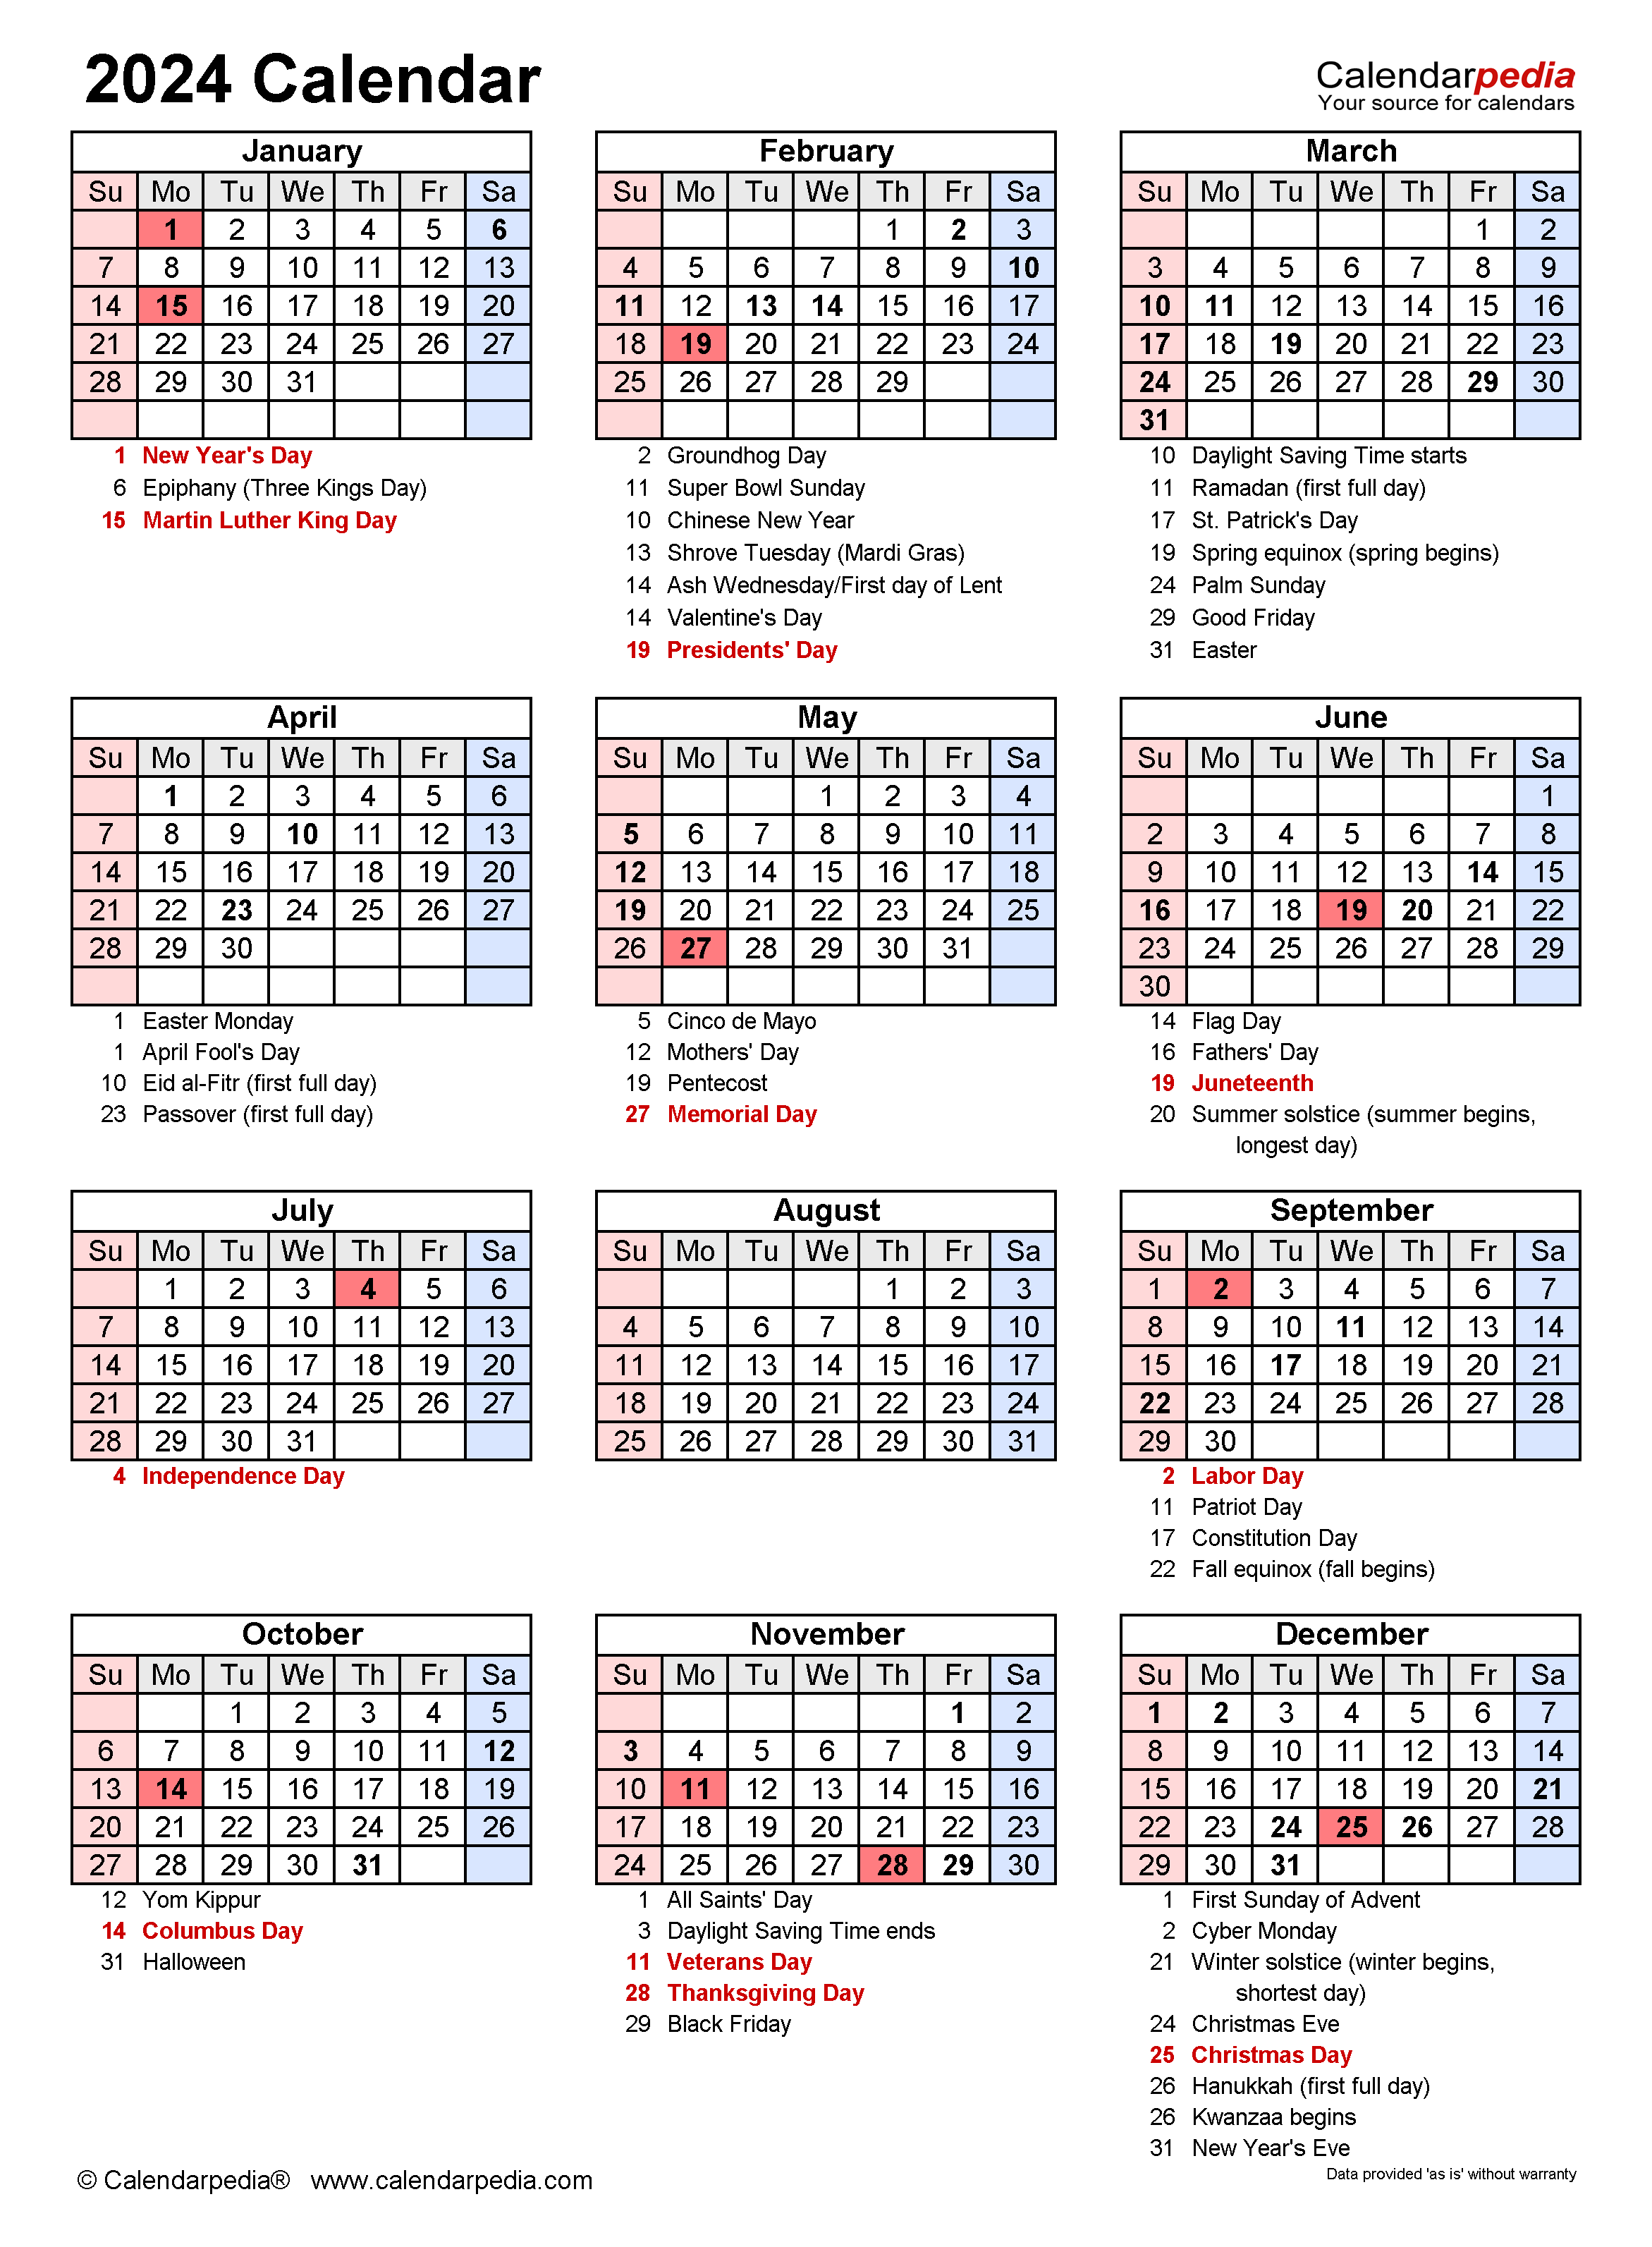 2024 Calendar Free Printable 2024 Printable Calendar With Holidays - Free Printable 2024 Calendar With Holidays August